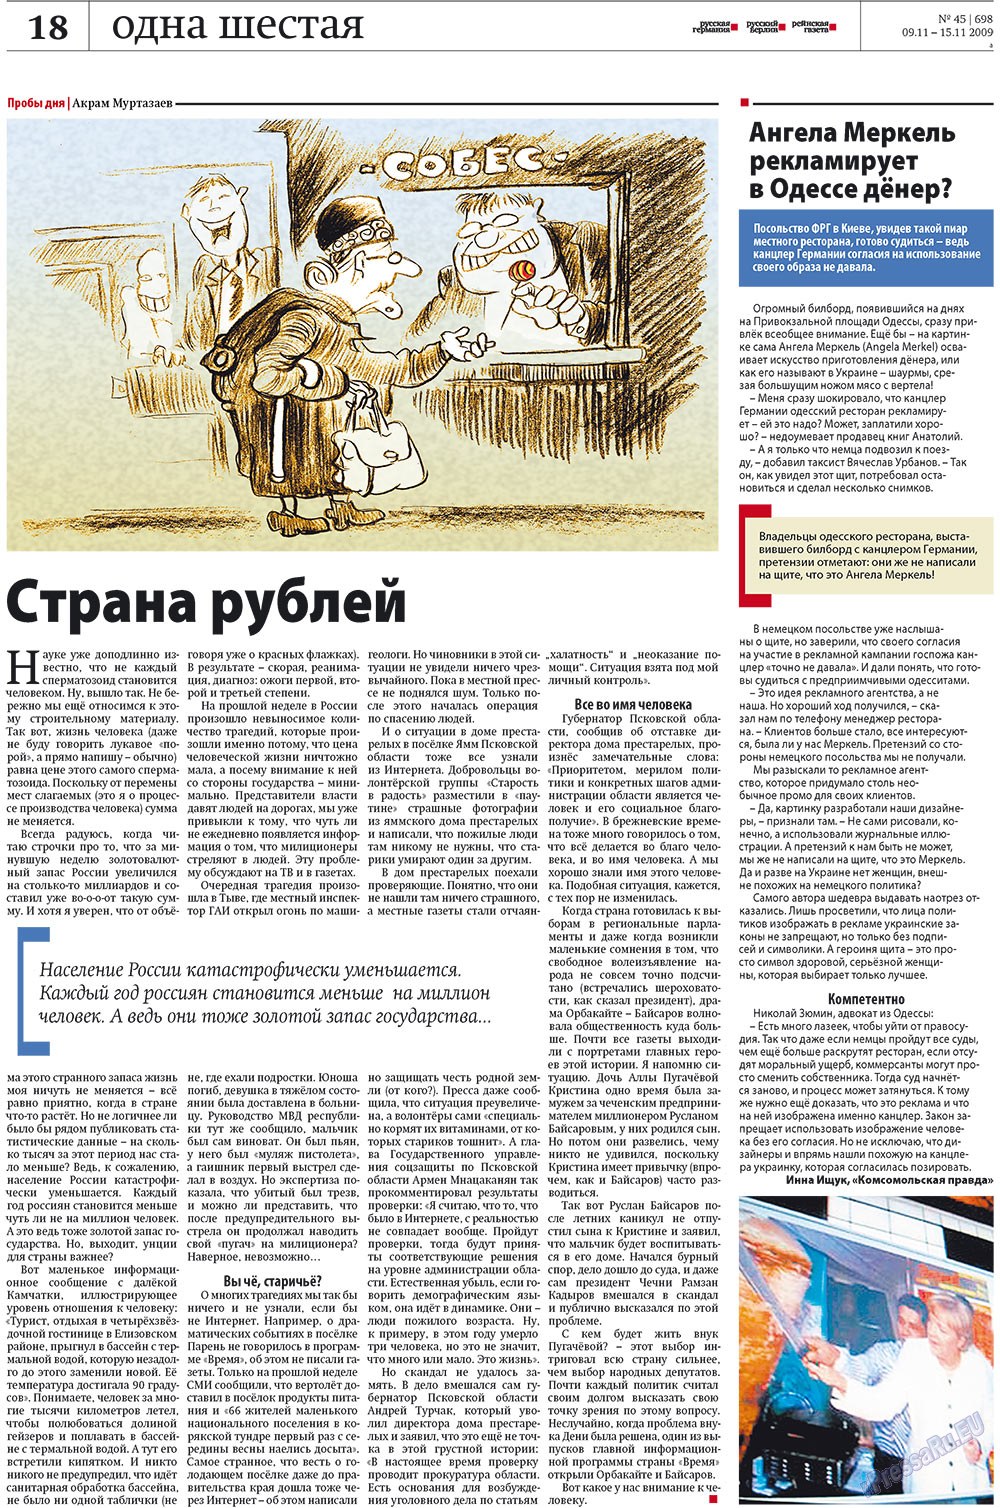 Редакция Берлин, газета. 2009 №45 стр.16